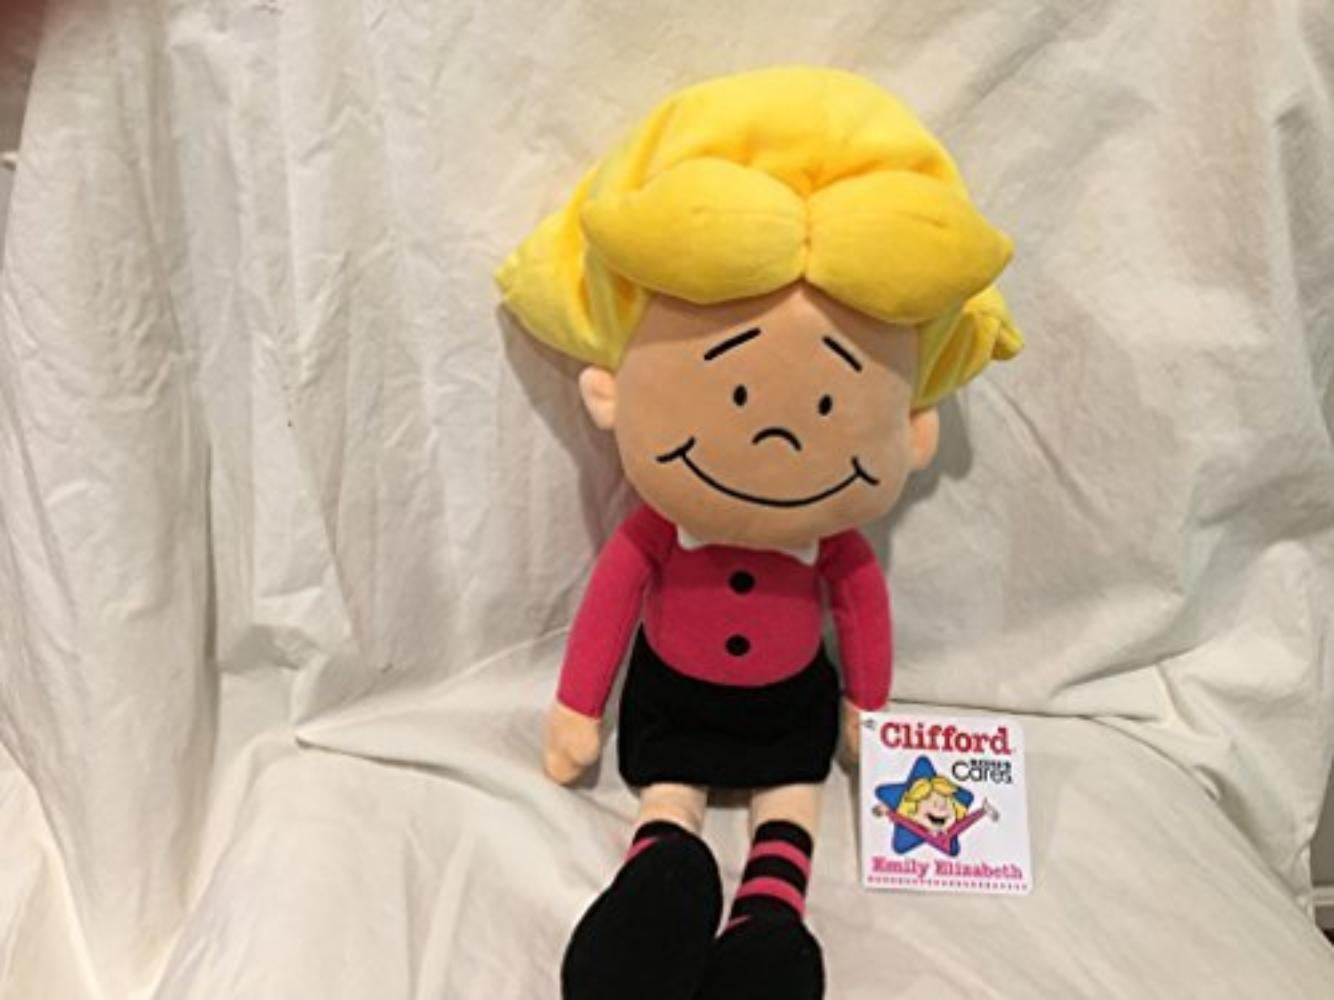 Kohl's Cares Clifford Emily Elizabeth Plush Stuffed Toy 15 inches 